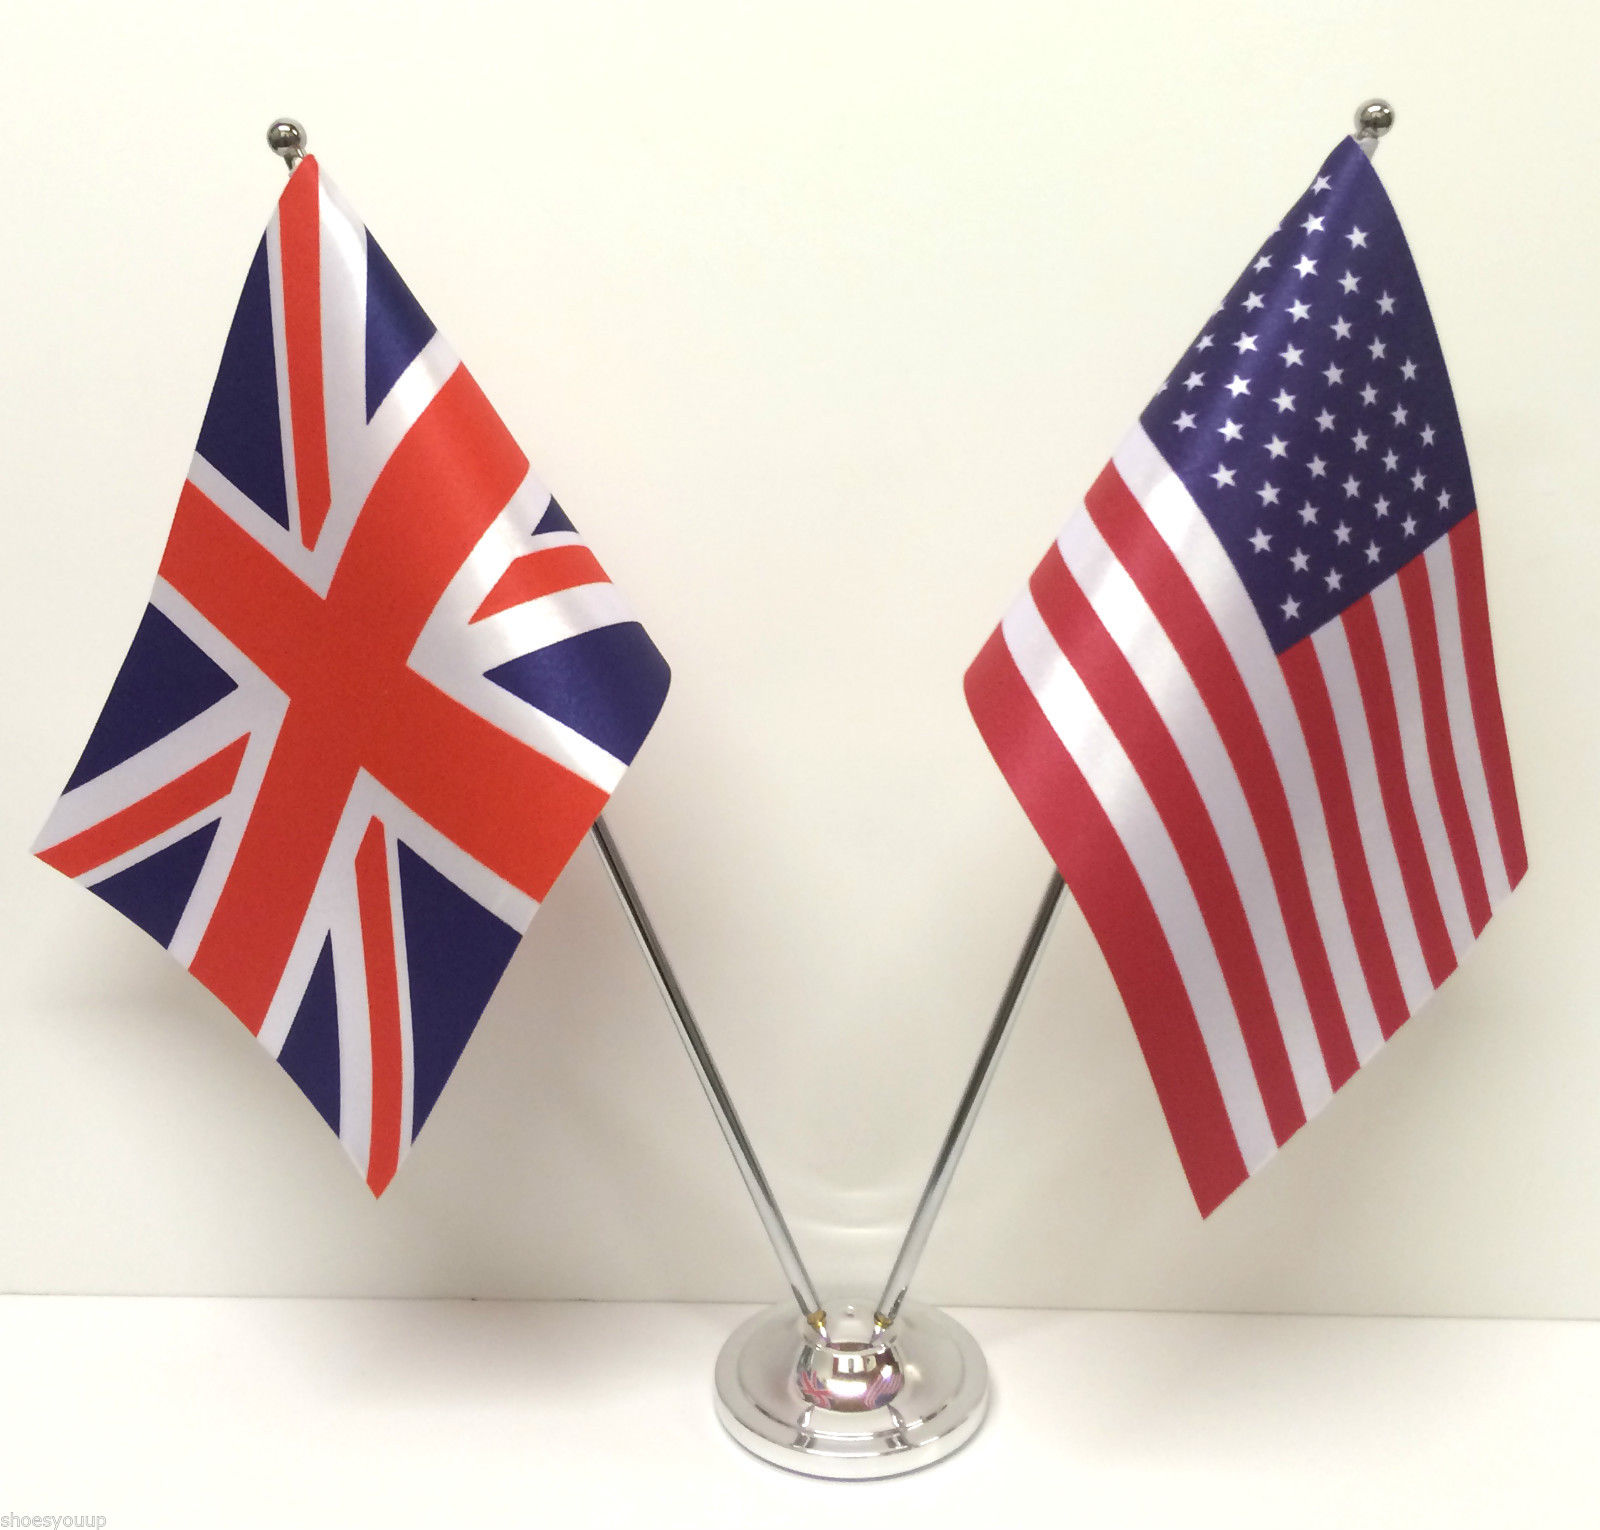 Union-Jack-GB-USA-America-Friendship-Flags-Chrome-Satin-Table-Desk-Flag-Set-361116770765